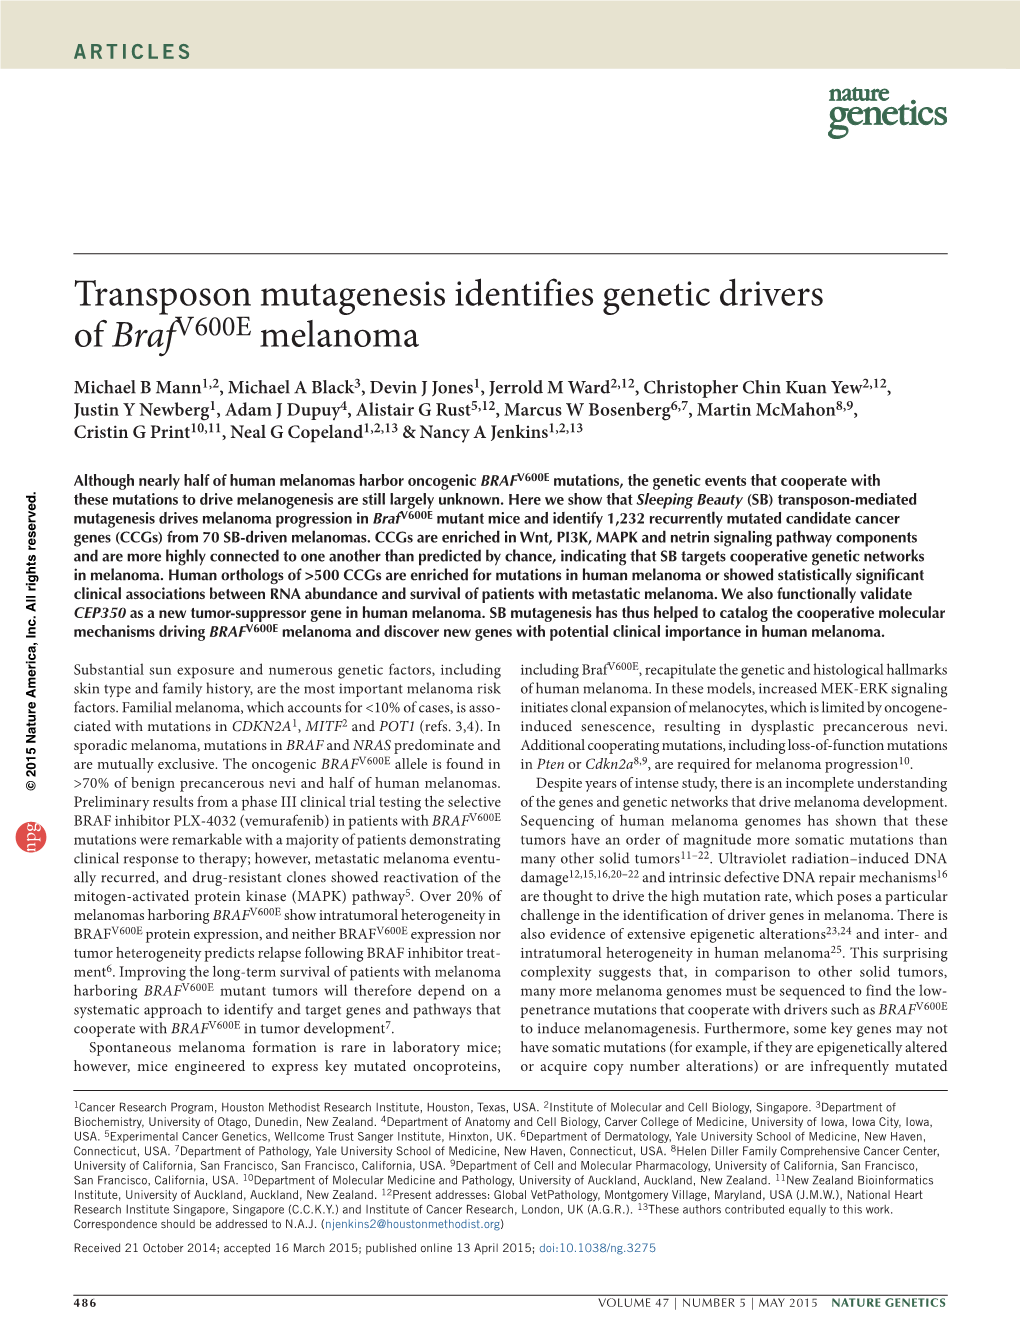 Transposon Mutagenesis Identifies Genetic Drivers of Brafv600e Melanoma